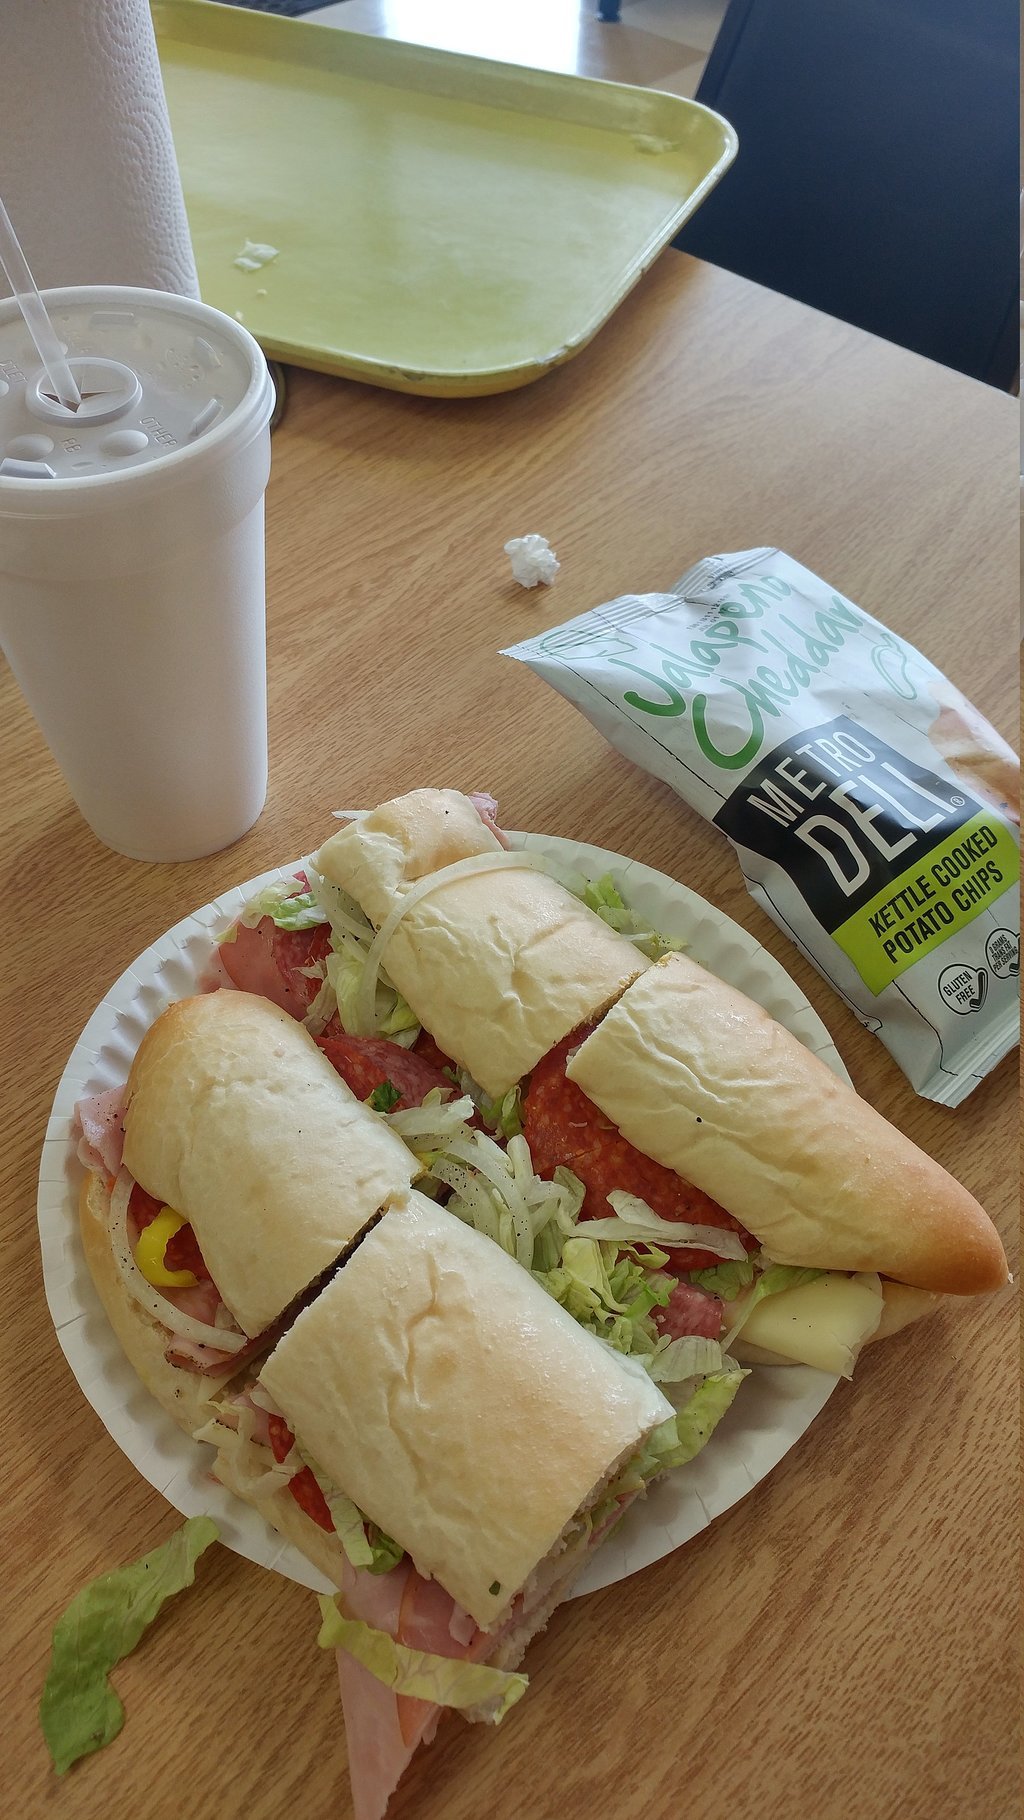 Brian`s Giant Submarine Sandwiches